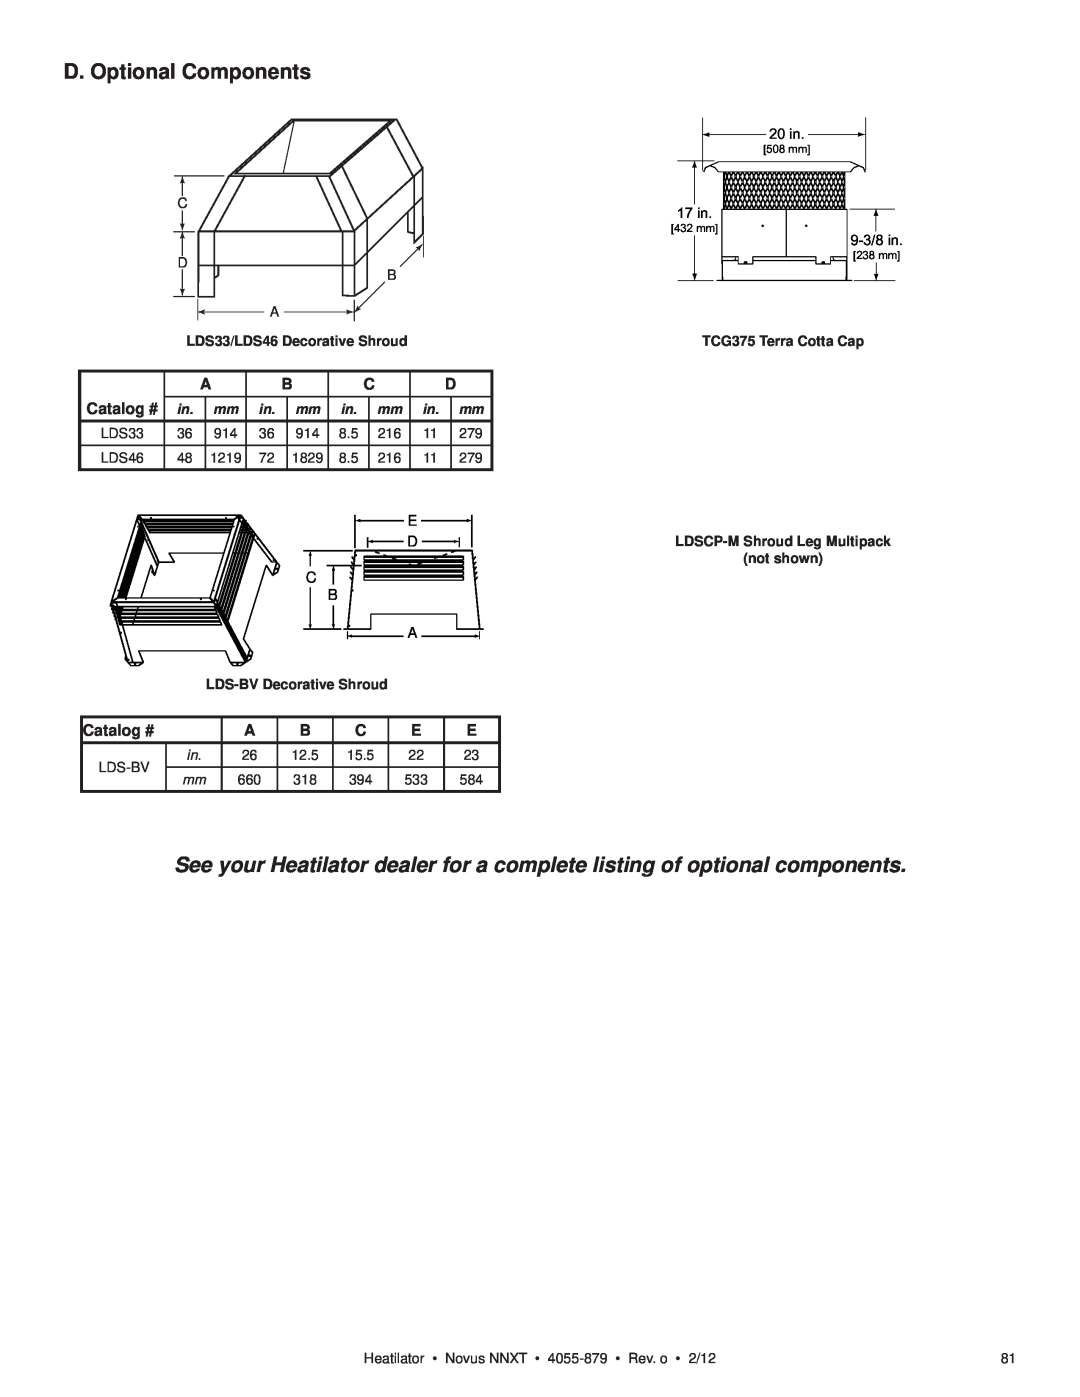 Heatiator NNXT3933IL, NNXT4236IL NNXT3933I D. Optional Components, LDS33/LDS46 Decorative Shroud, LDS-BV Decorative Shroud 